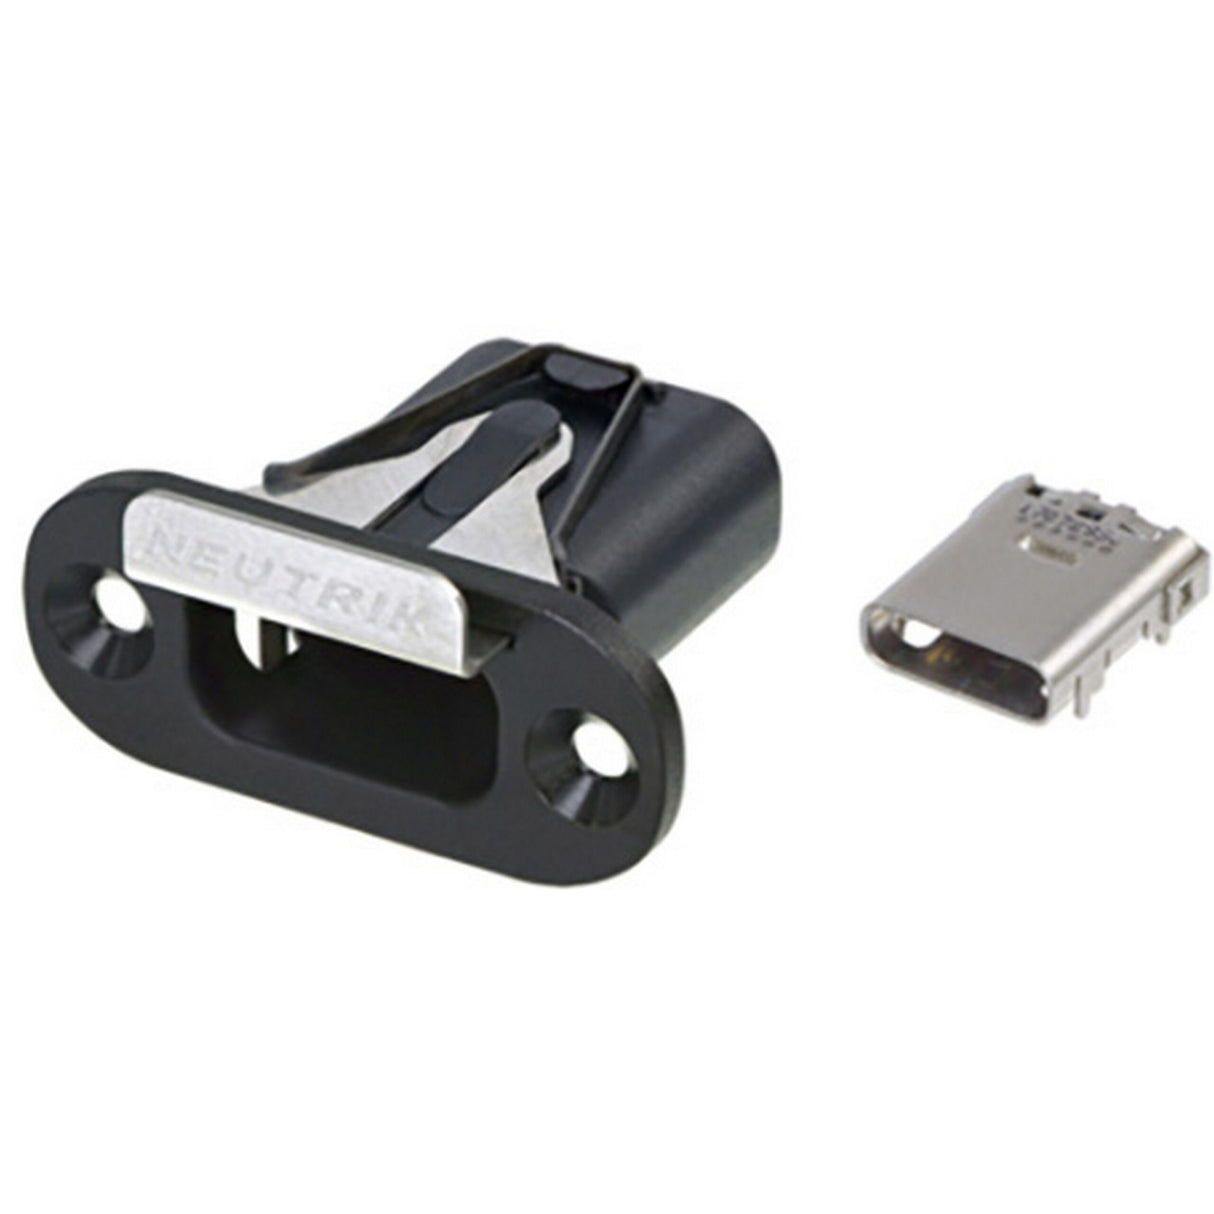 Neutrik NMC-C-HR Receptacle mediaCON USB Type-C with Integrated USB